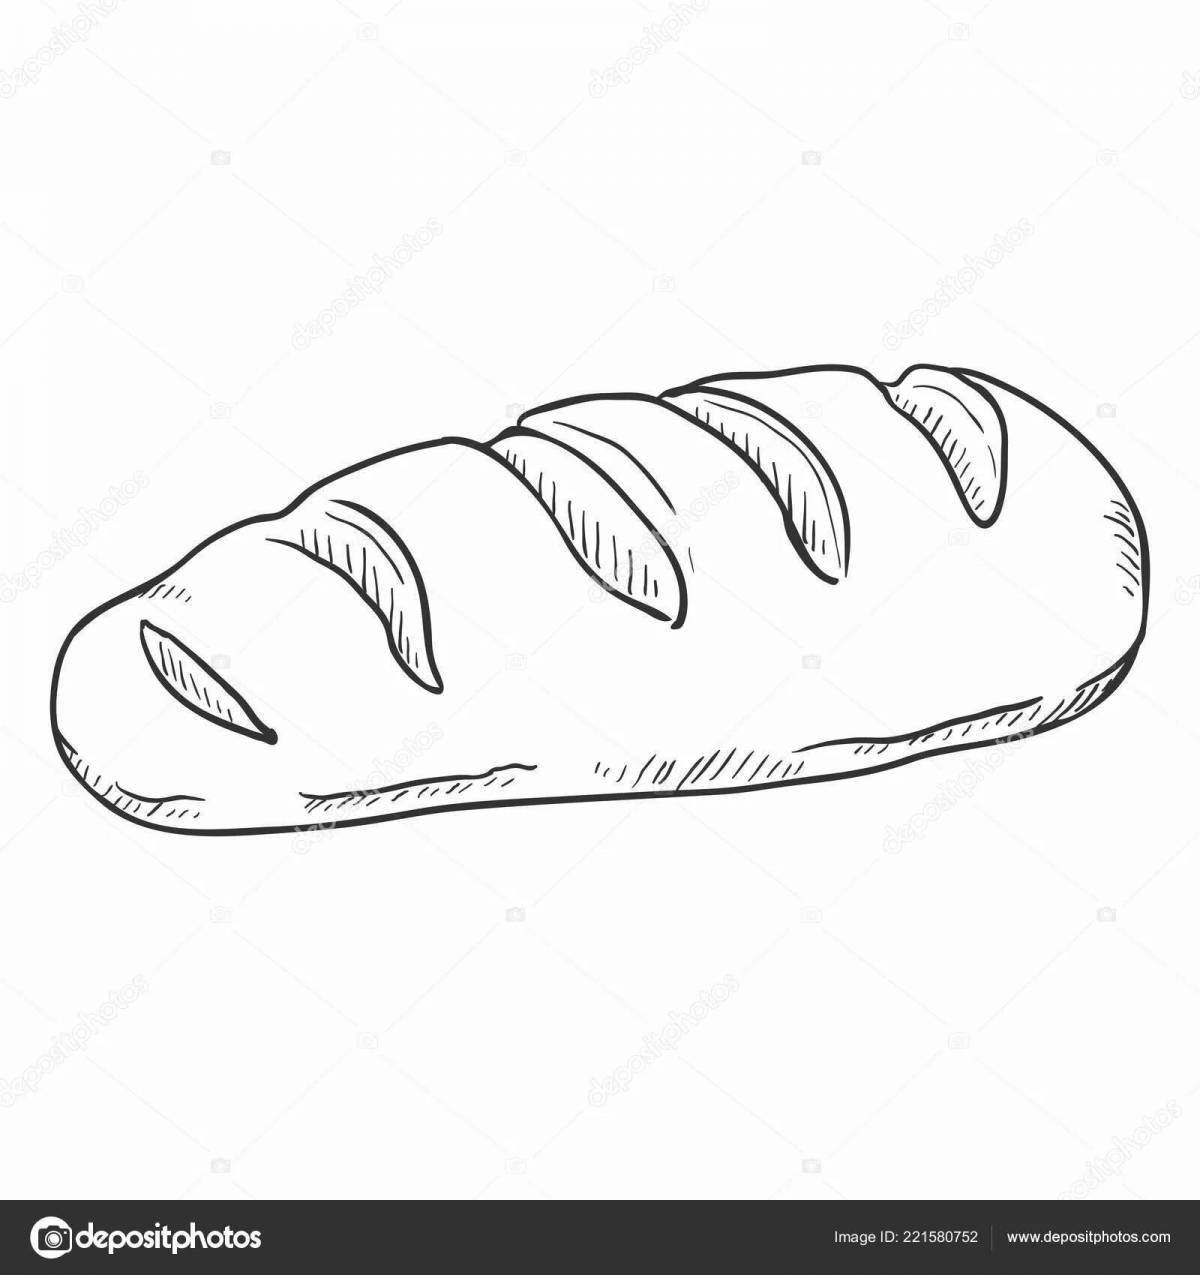 Brilliant juvenile loaf coloring page